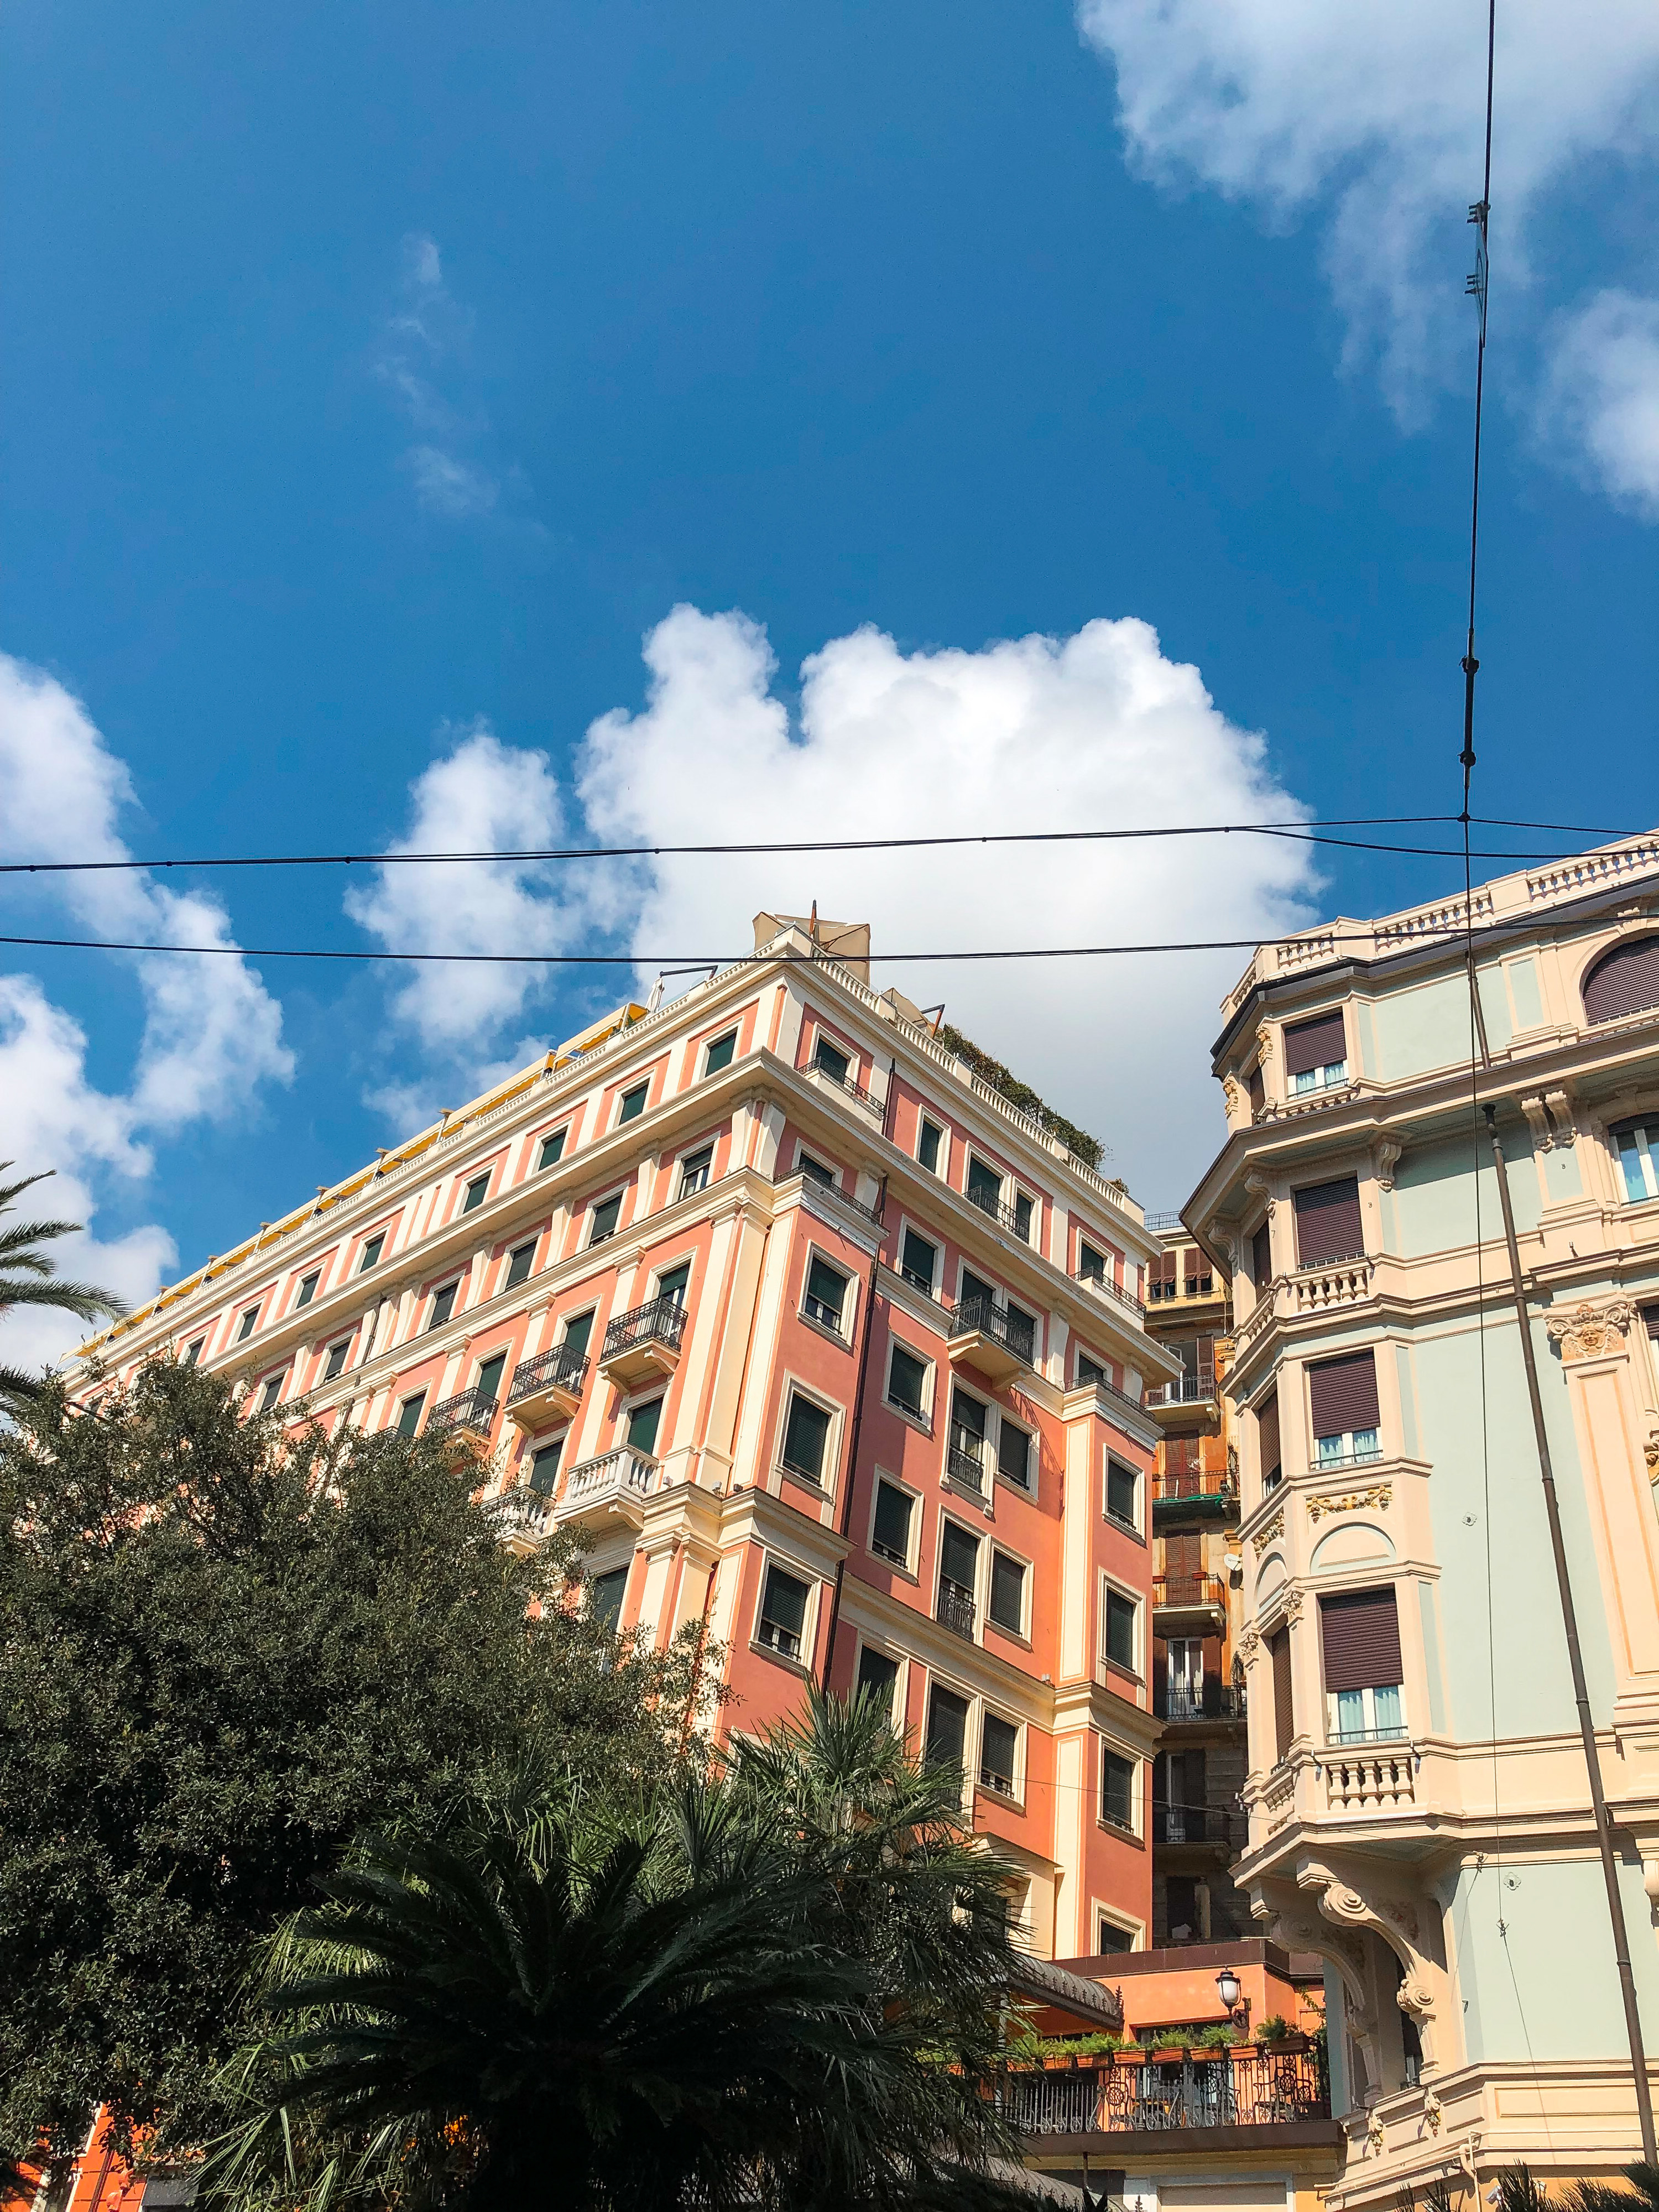 Tall buildings in Genoa